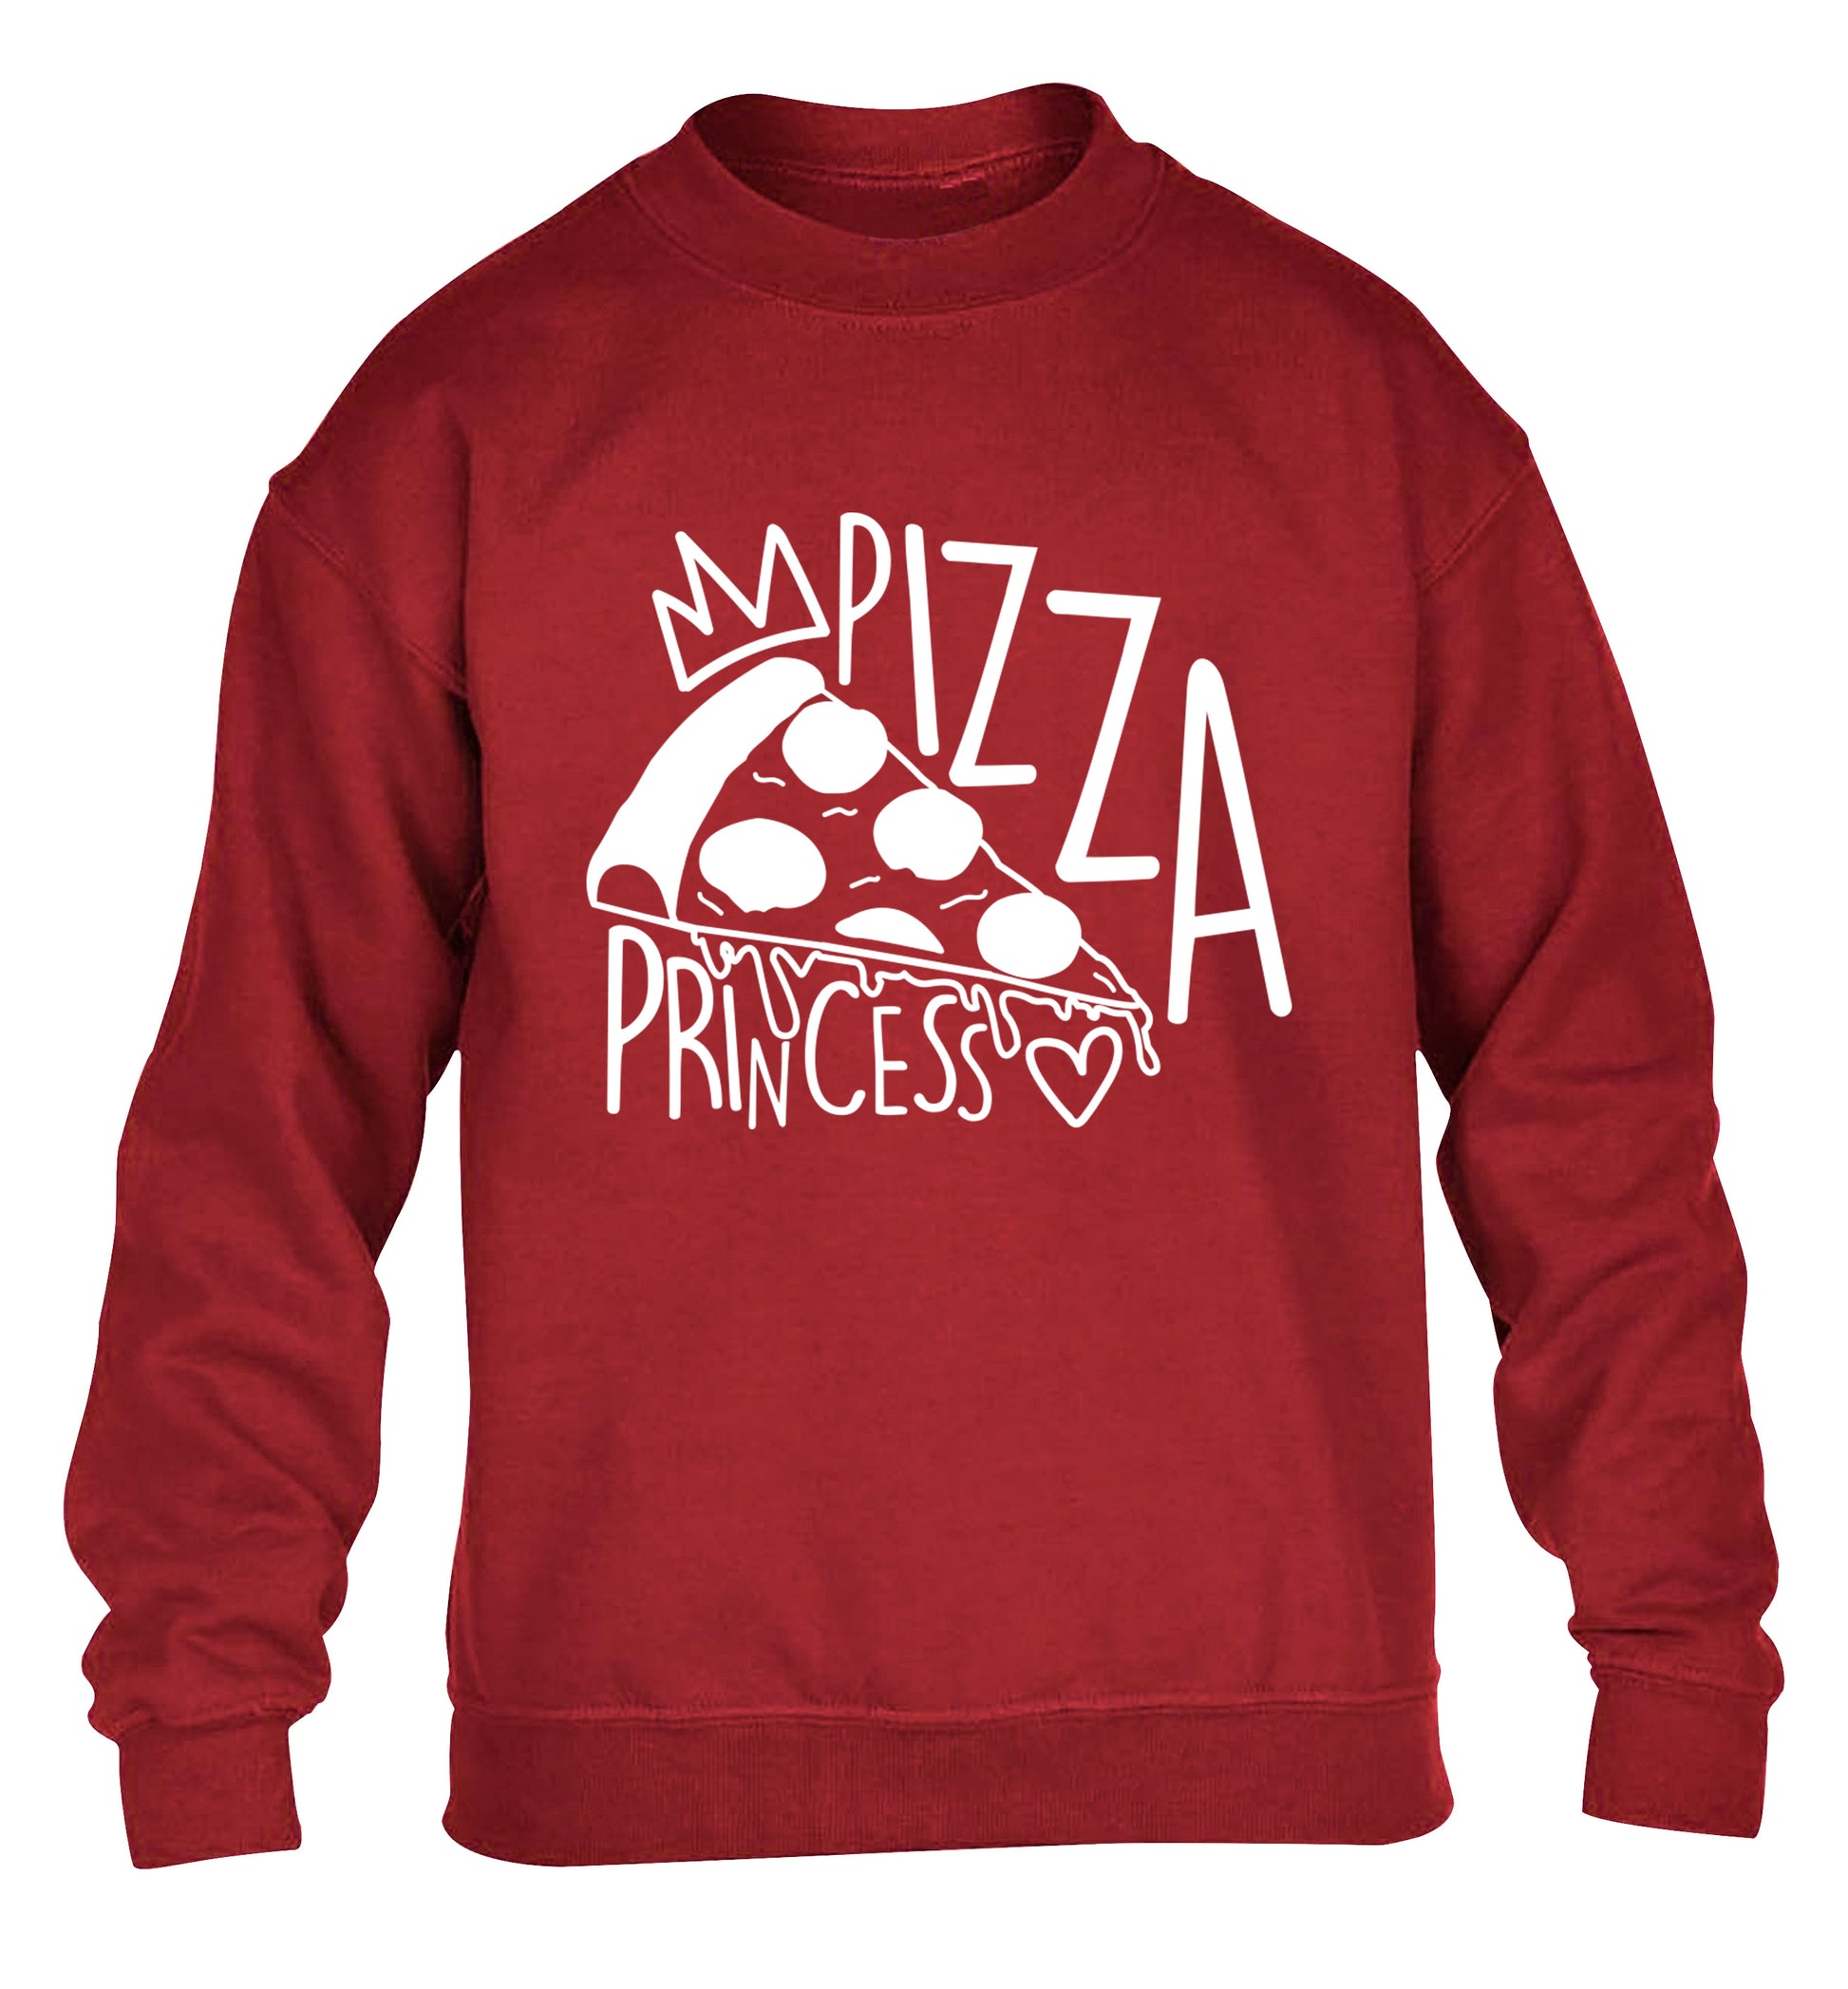 Pizza Princess children's grey sweater 12-13 Years